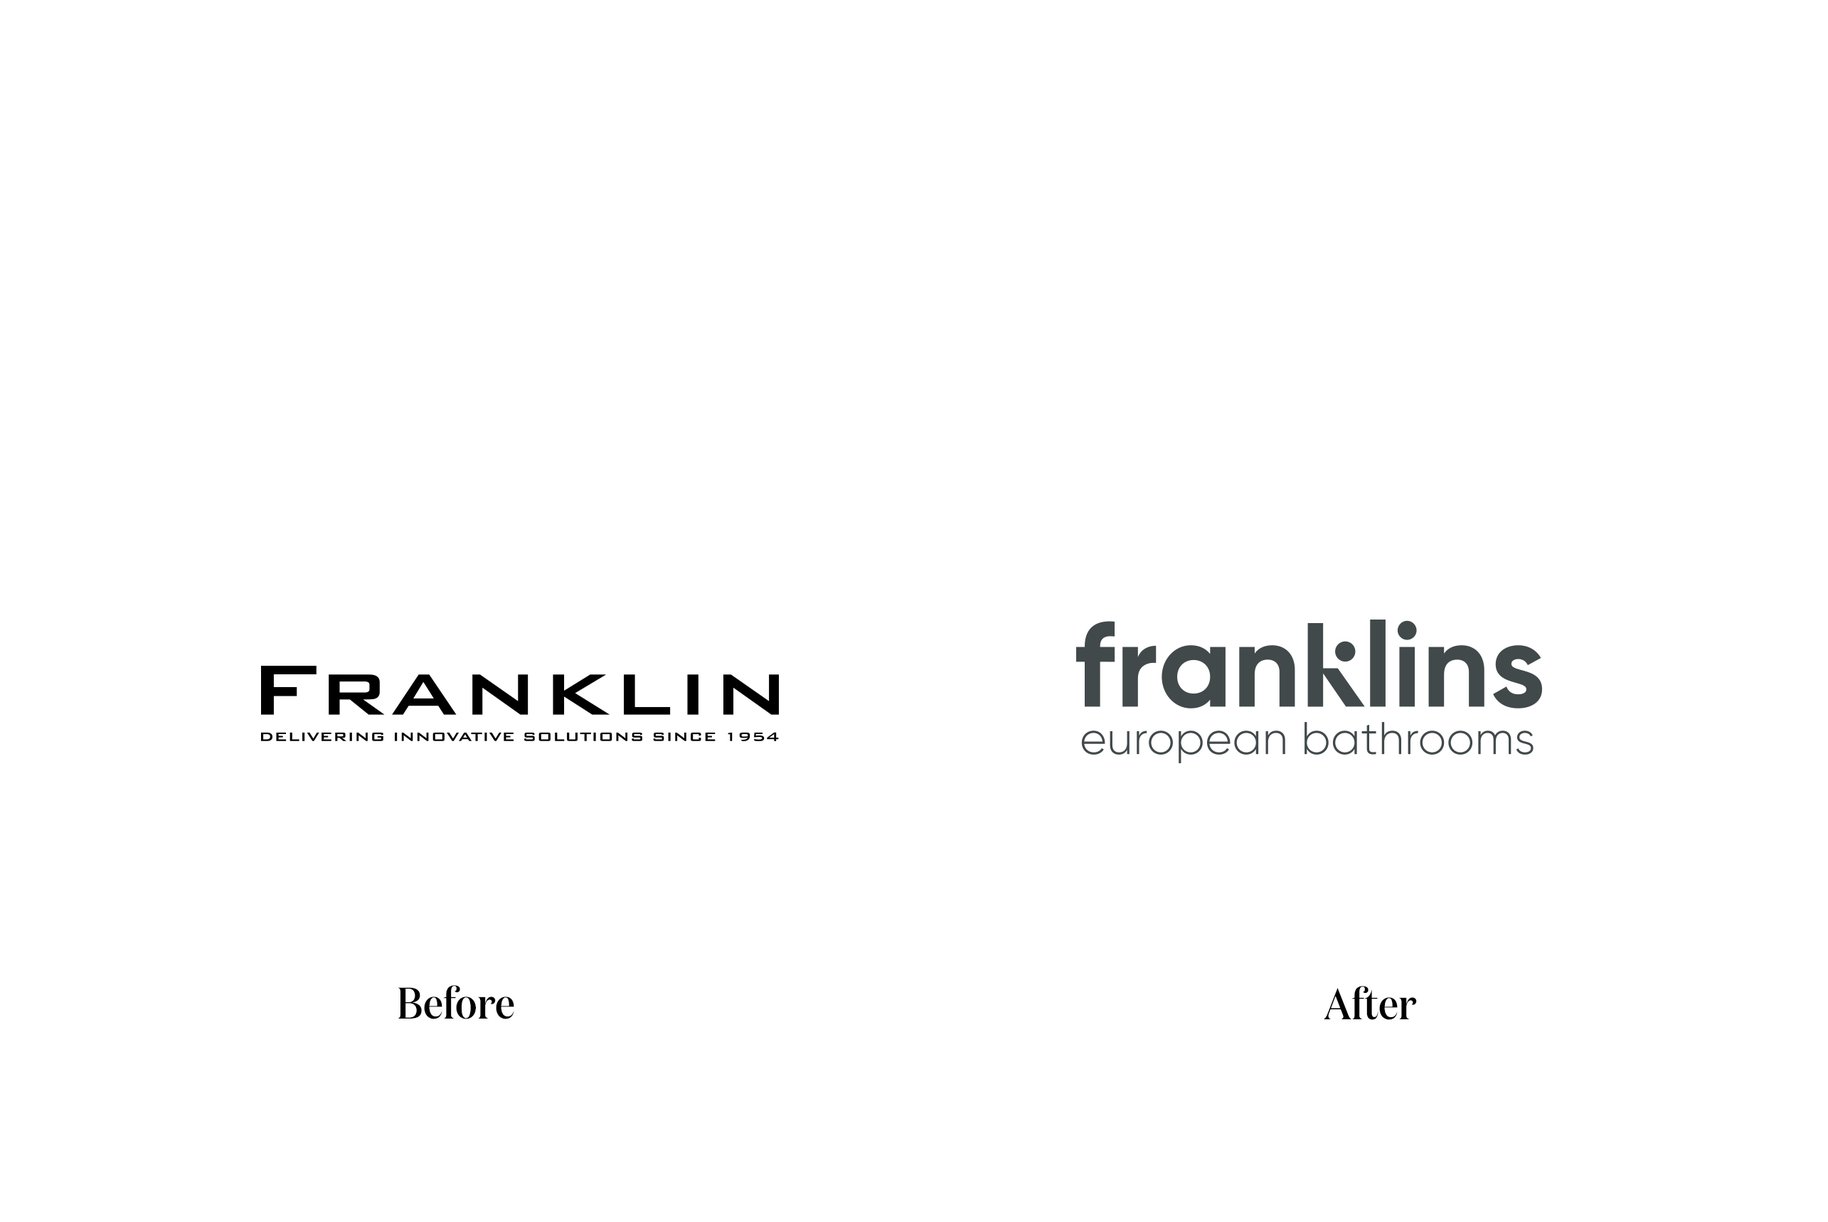 Franklins European Bathrooms image